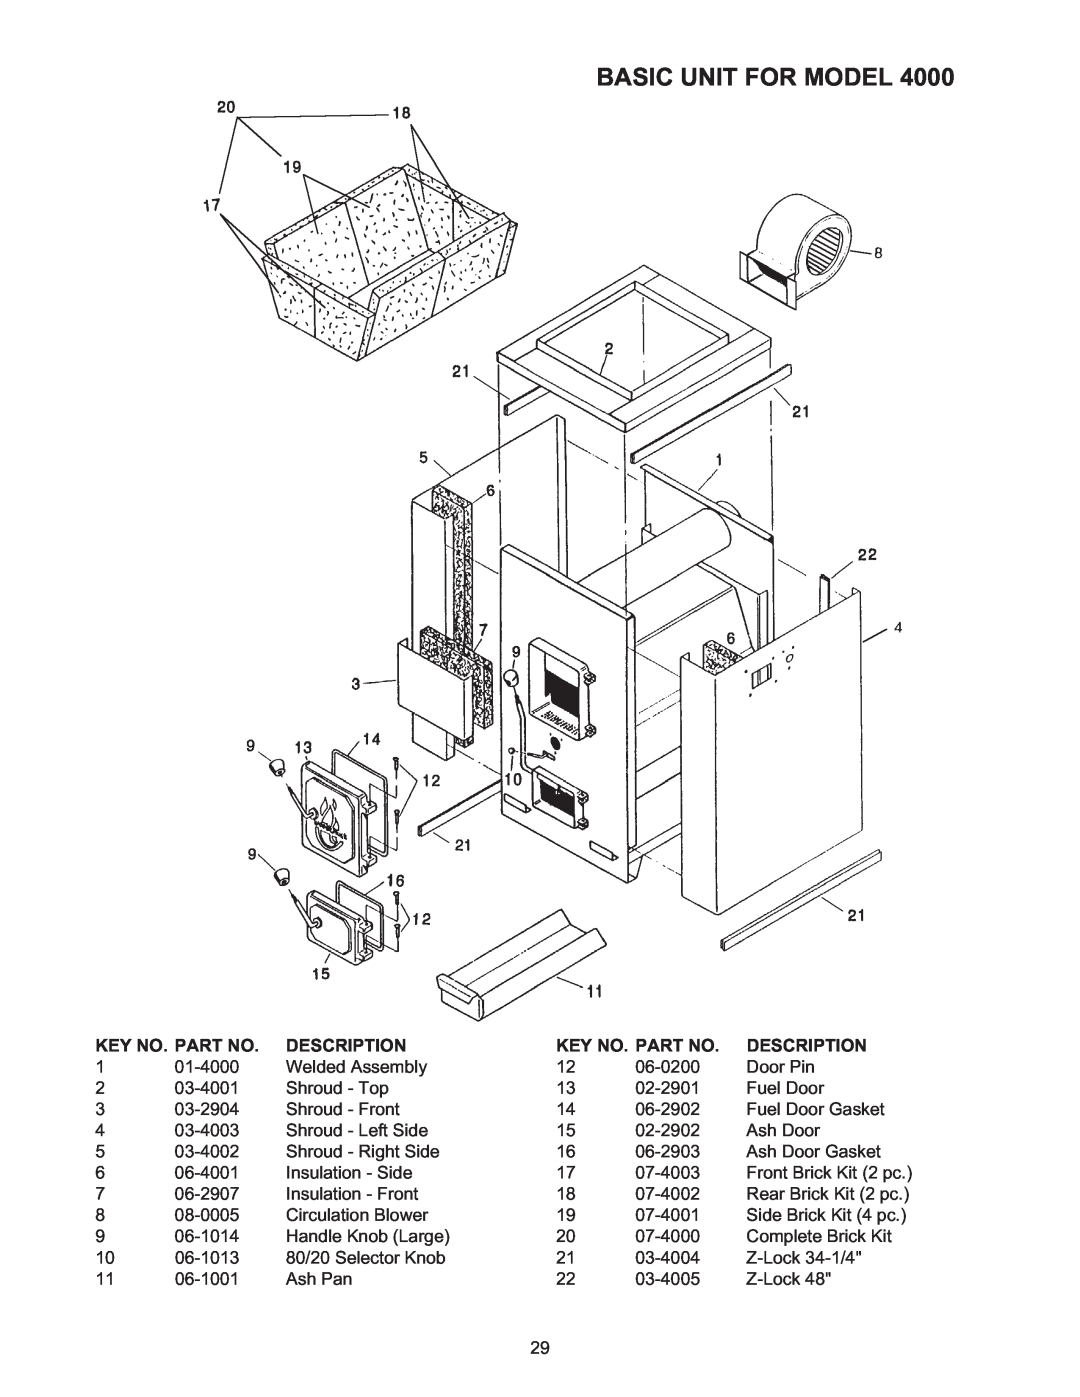 Meyer 2900, 526, woodchuck, 4000 manual Basic Unit For Model, Key No. Part No, Description 